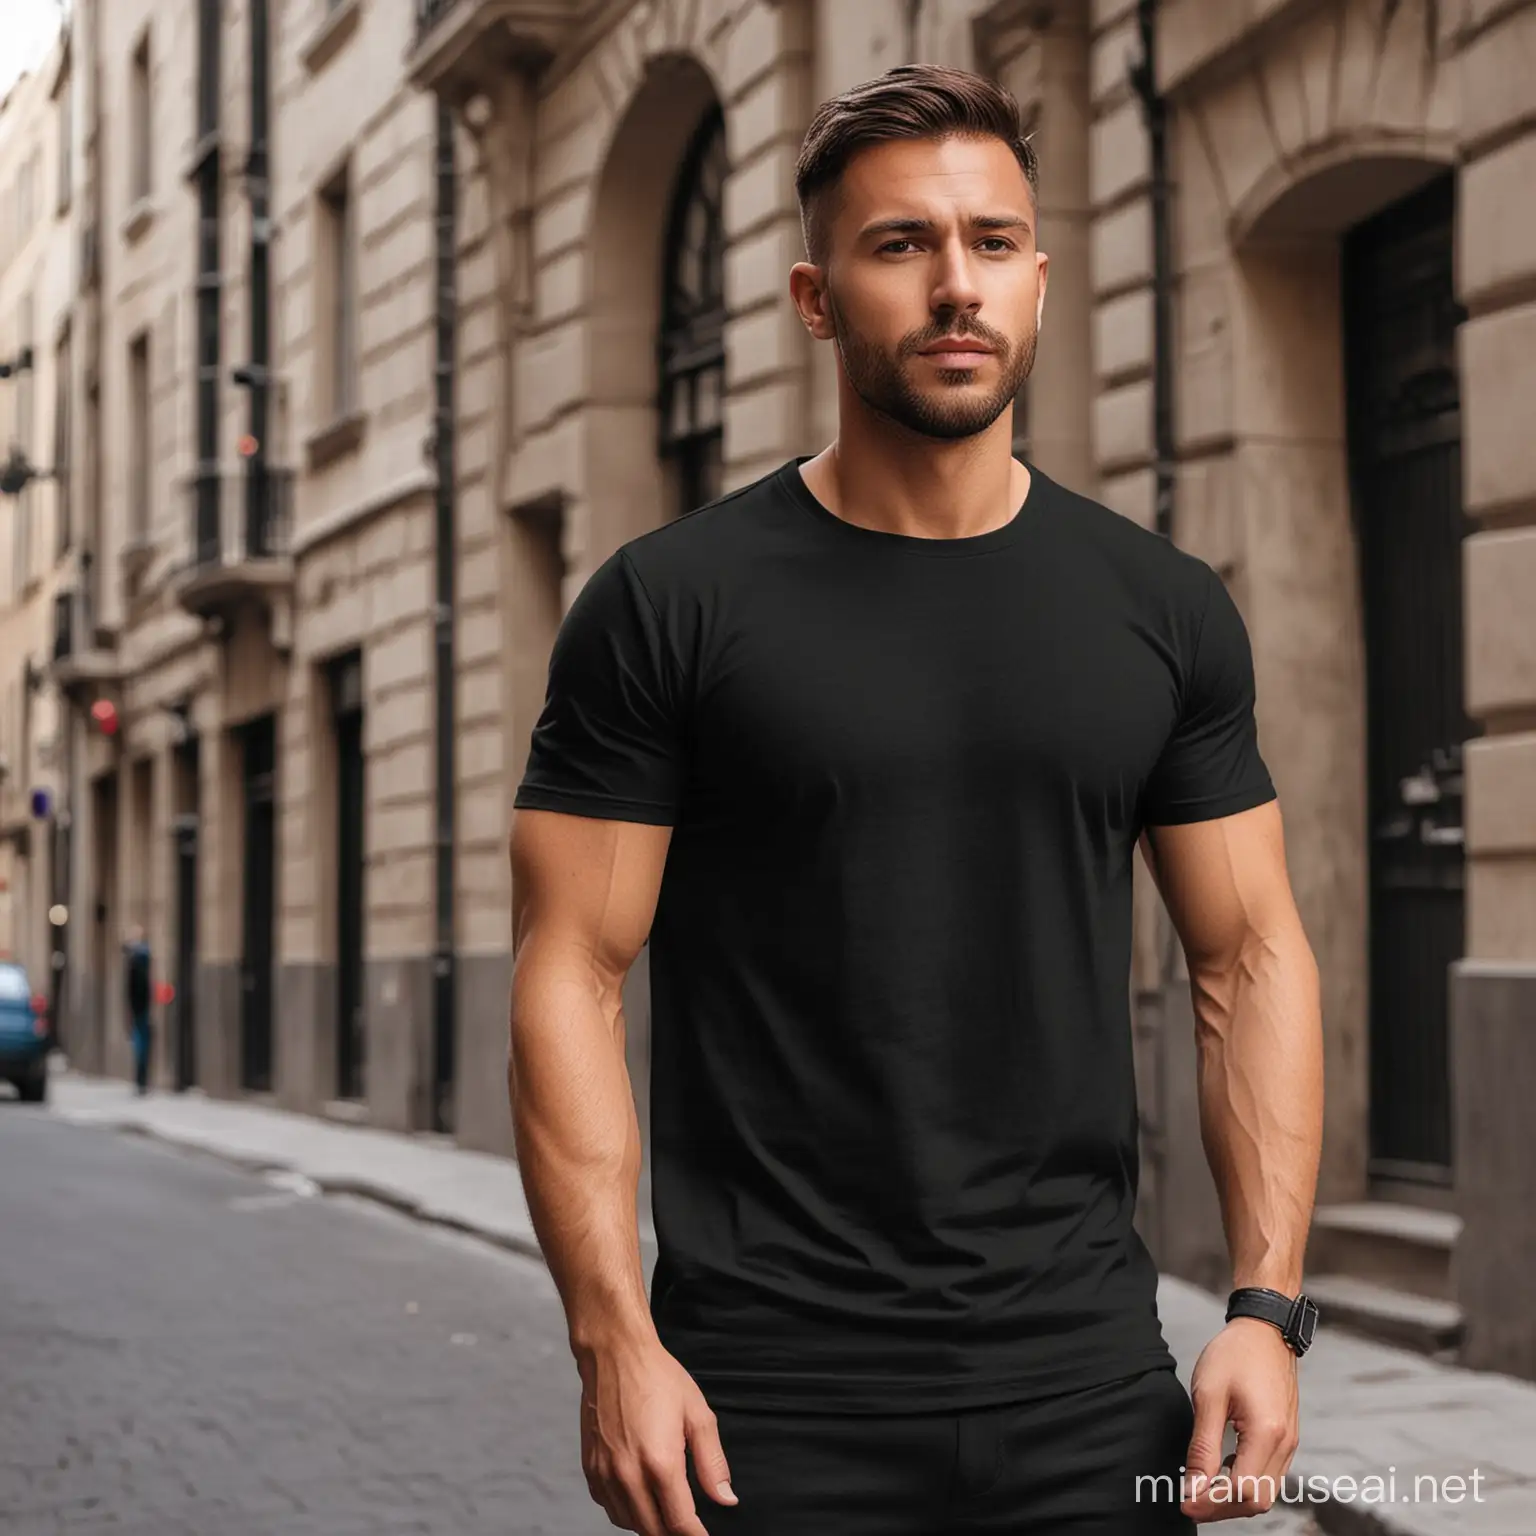 Men Wearing Black TShirts on City Streets